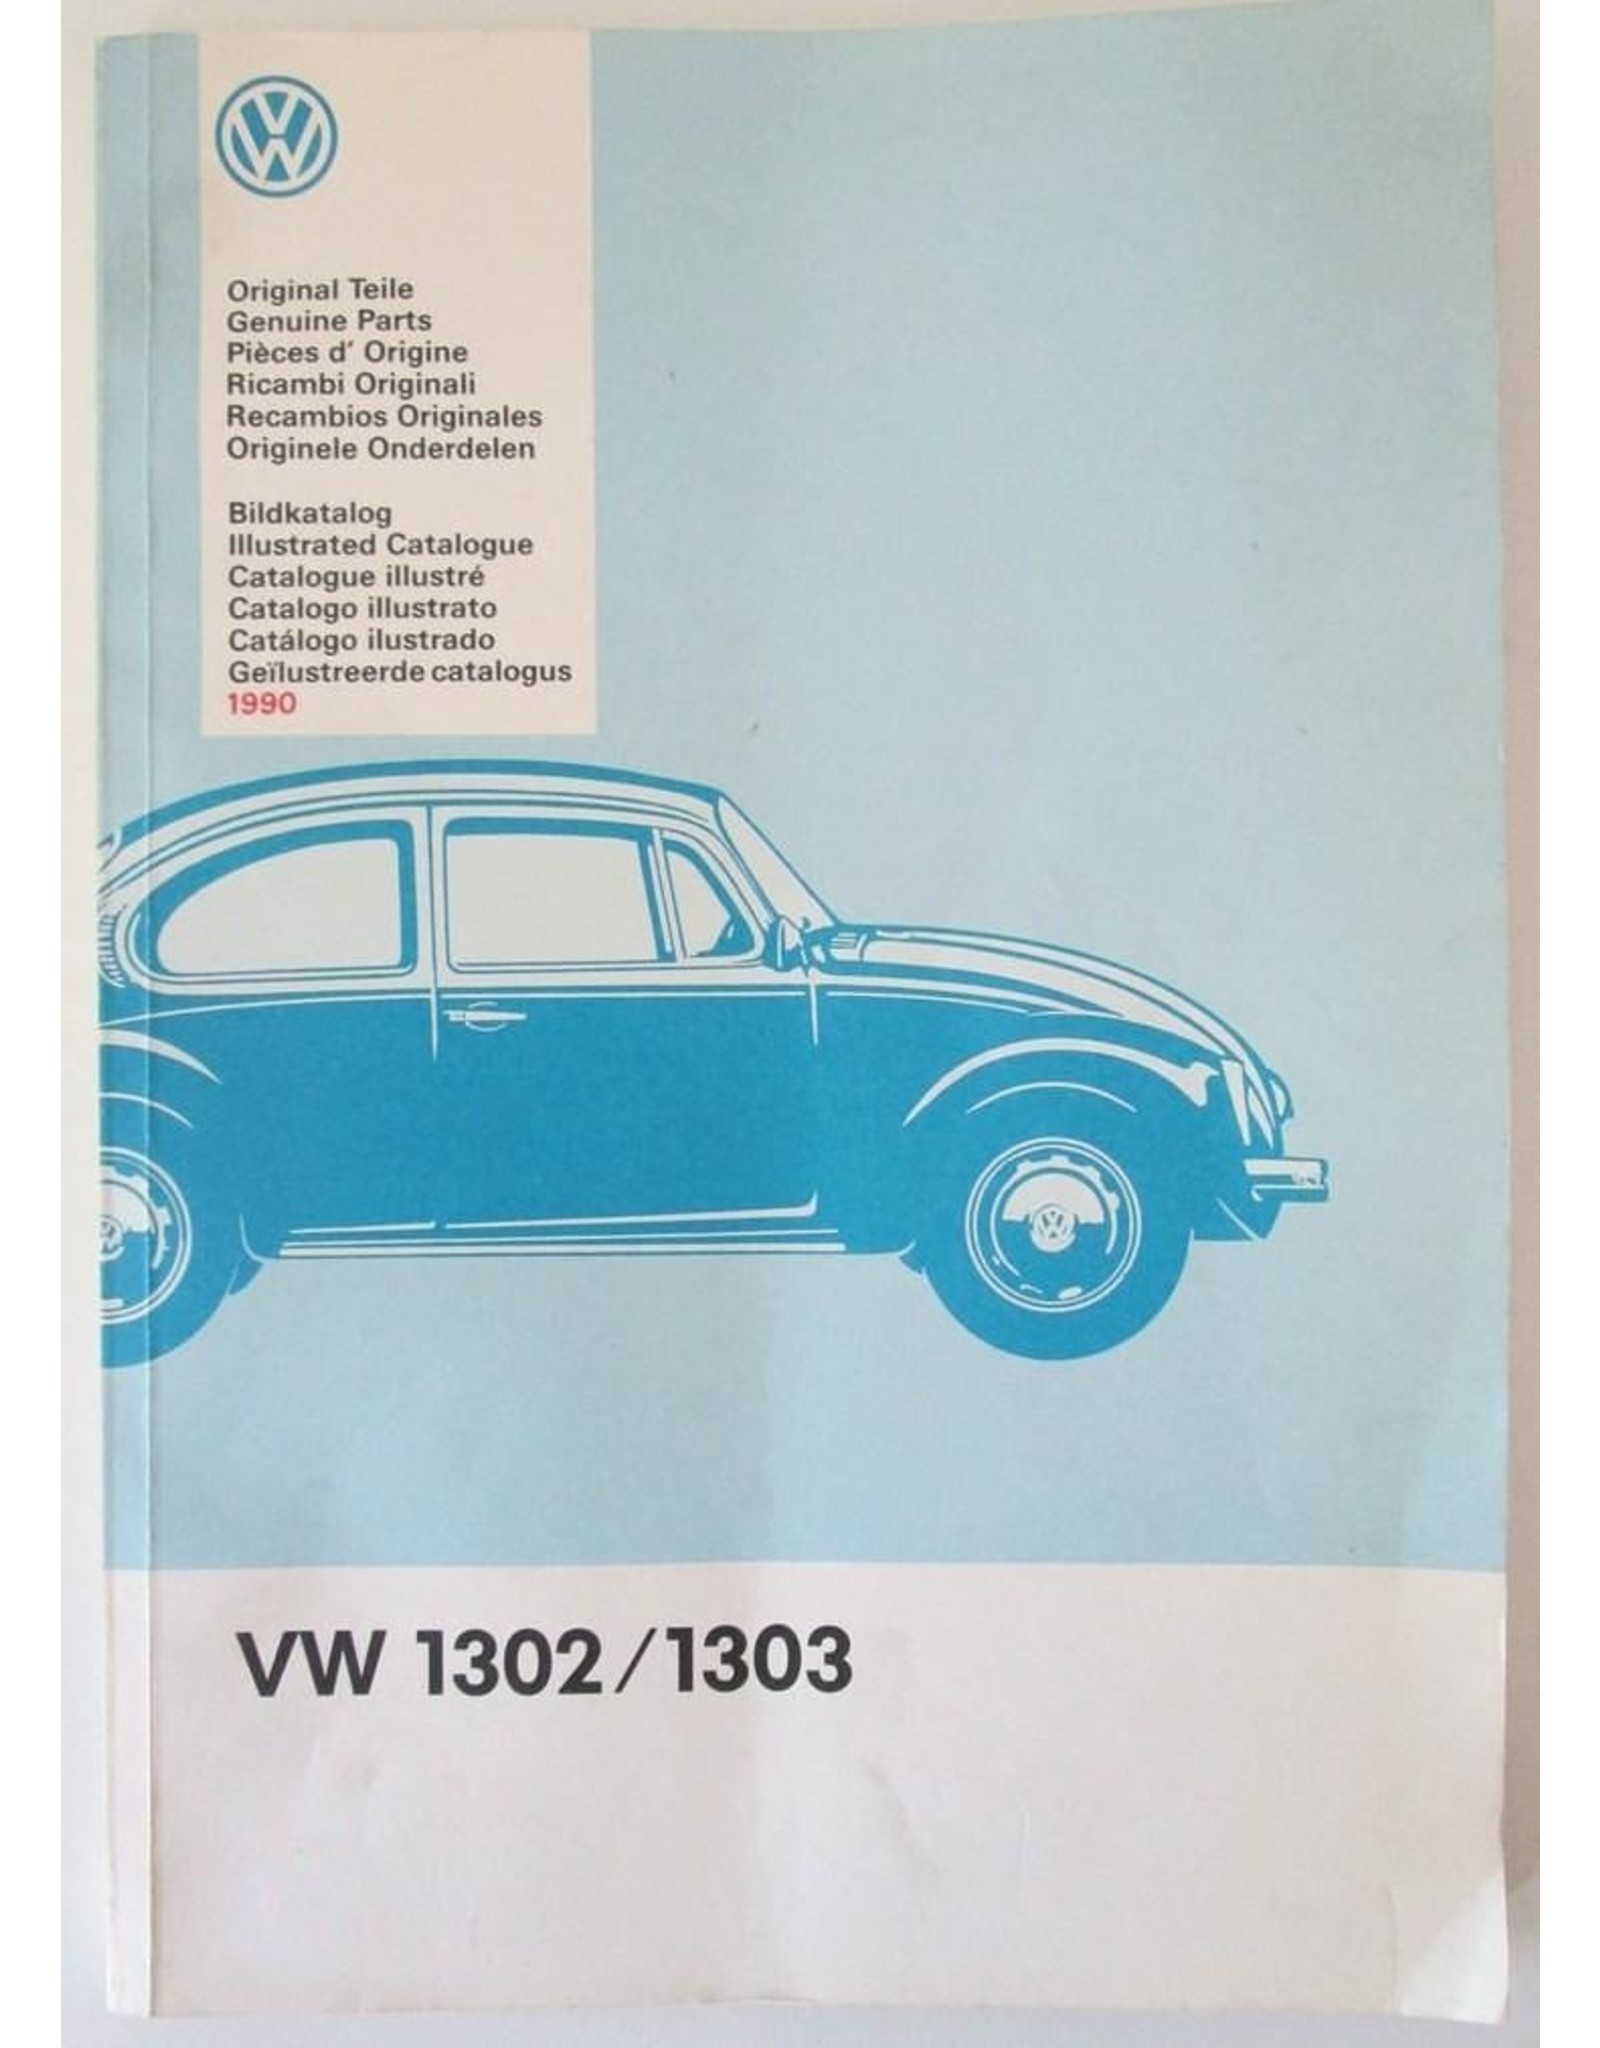 Volkwagen] - VW 1302 / 1303 Bildkatalog Original Teile 1990 - Arcana Cabana